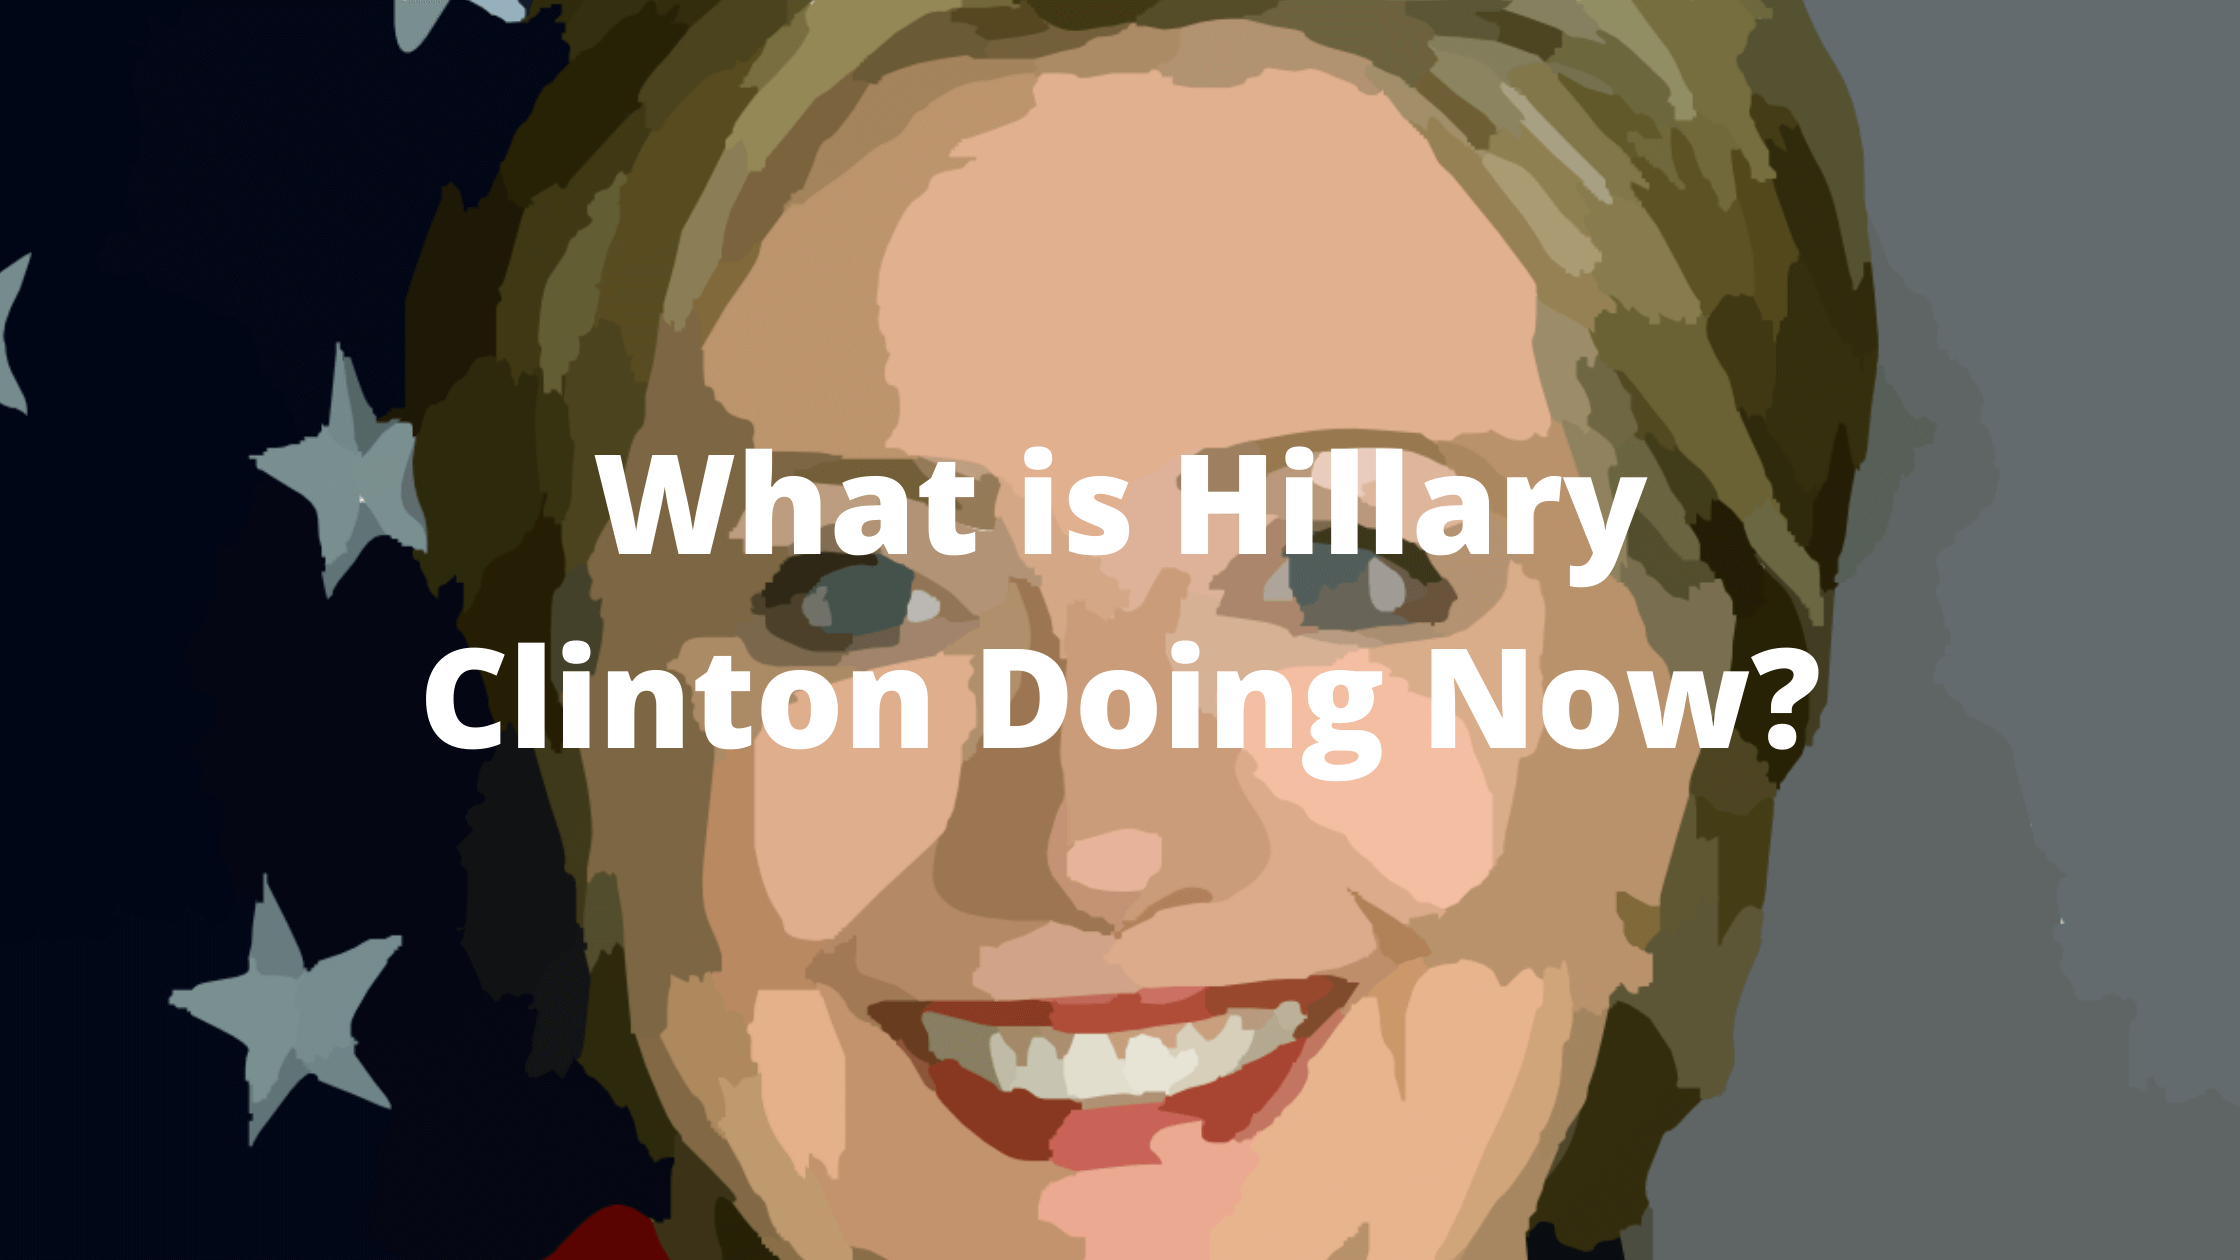 An artist's impression of Hillary Clinton